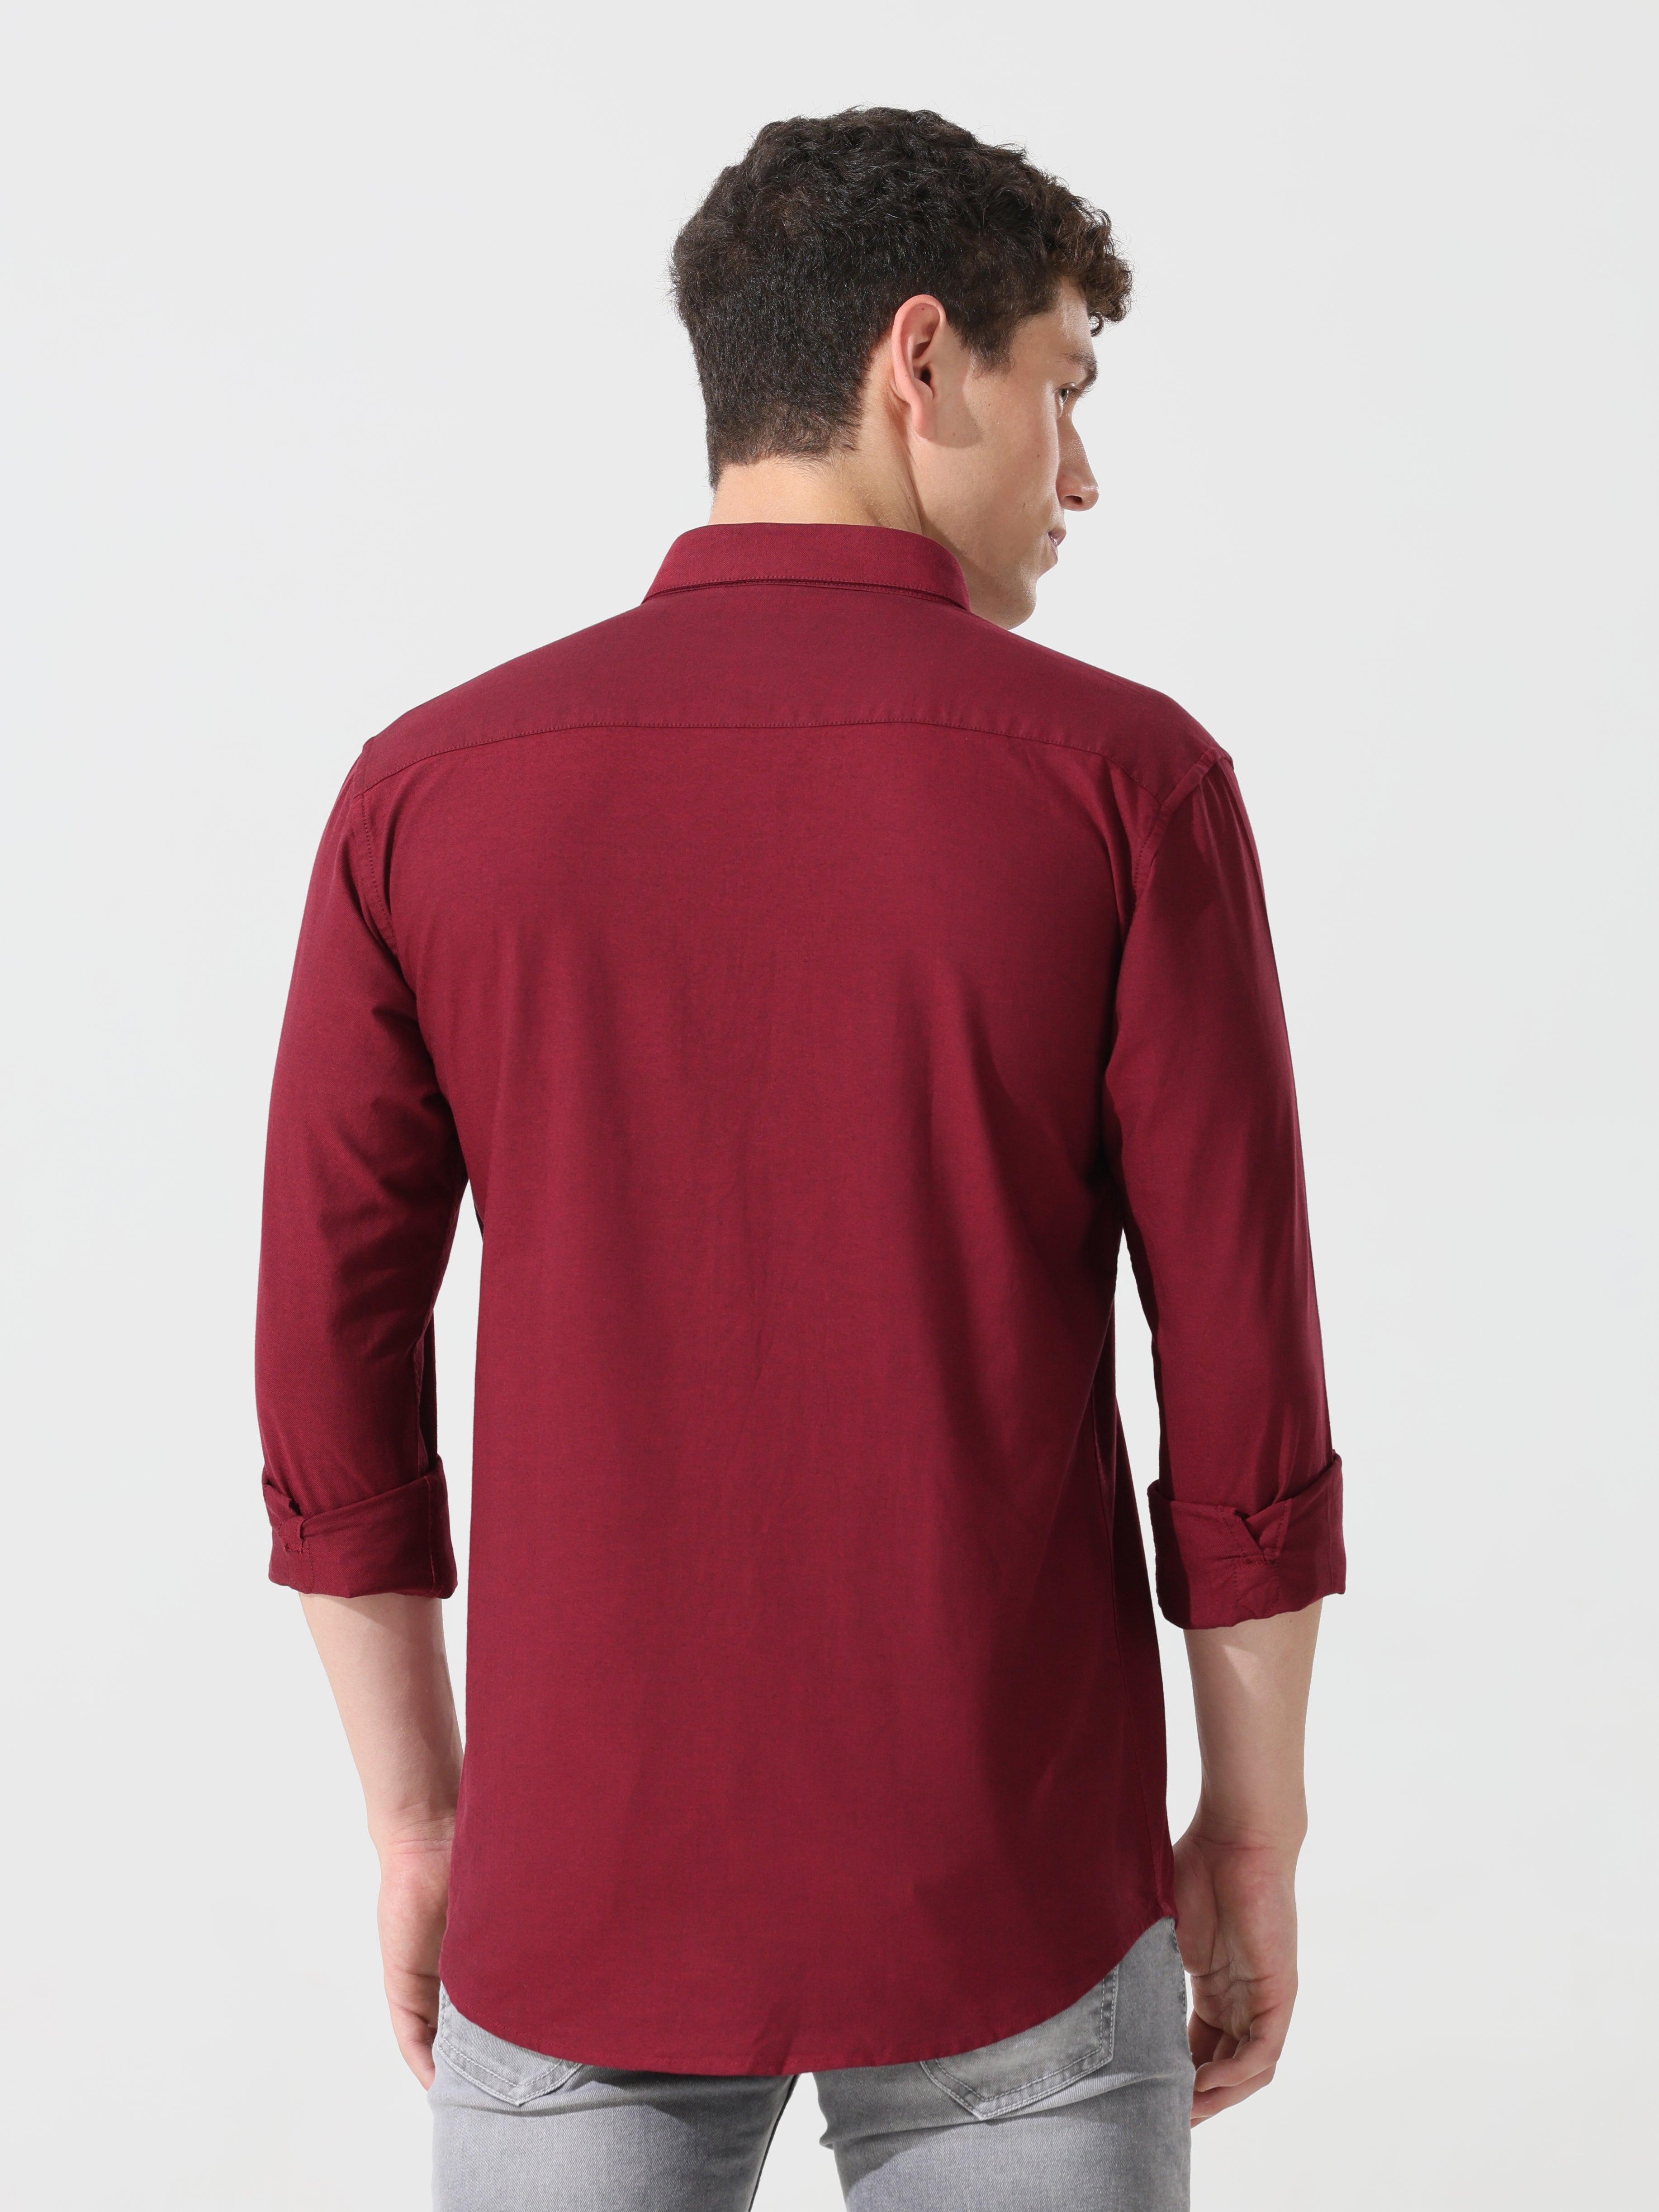 Oxford maroon slim fit shirt